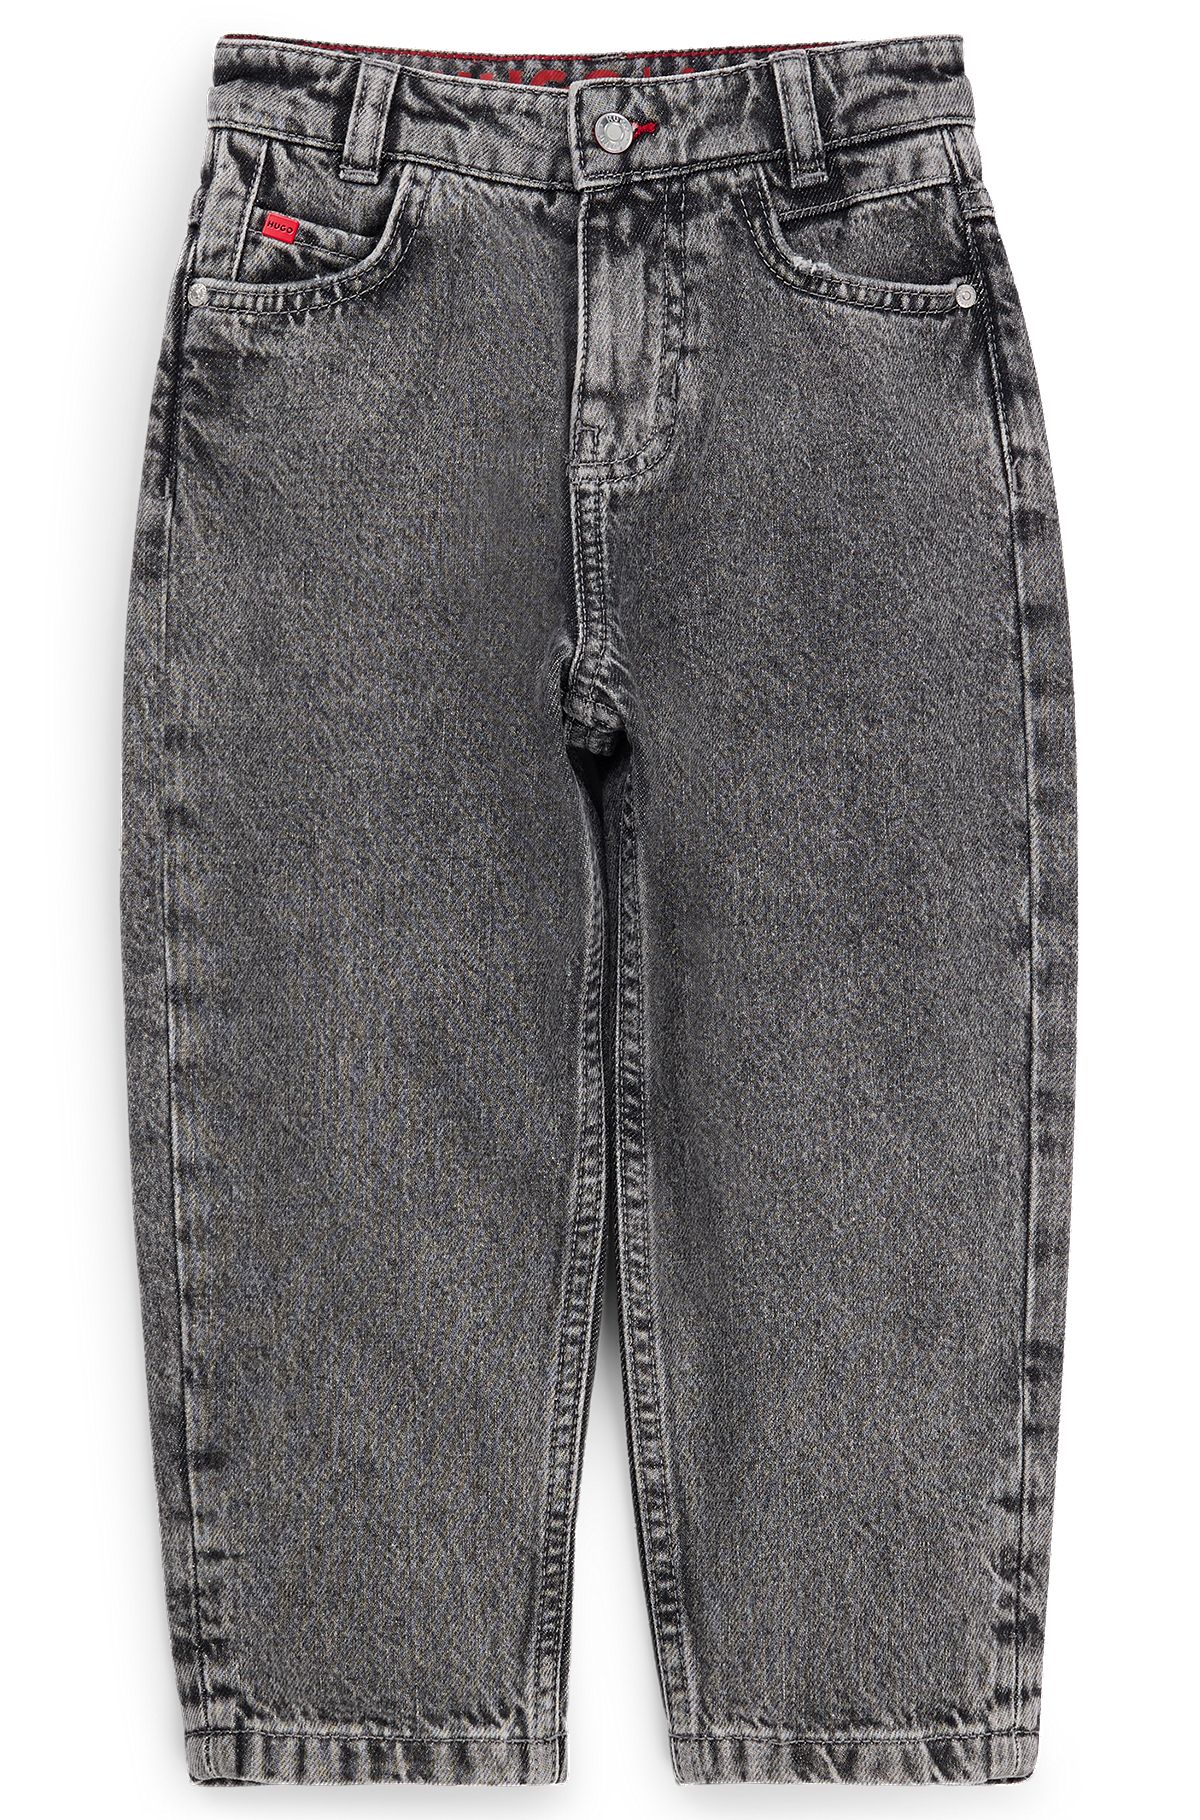 Kids' loose-fit jeans in grey cotton denim, Patterned